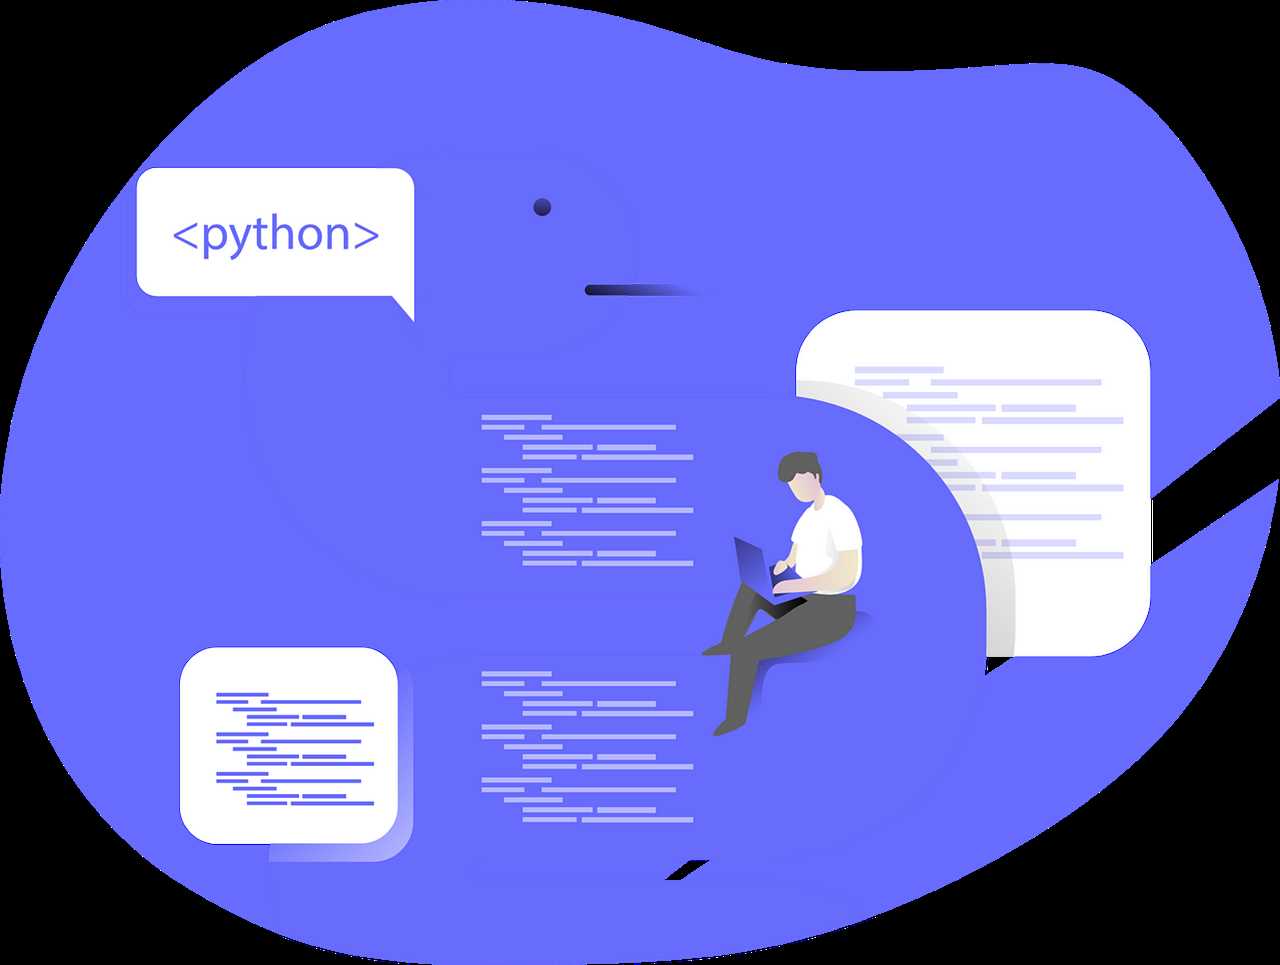 Step 1: Visit the Python website